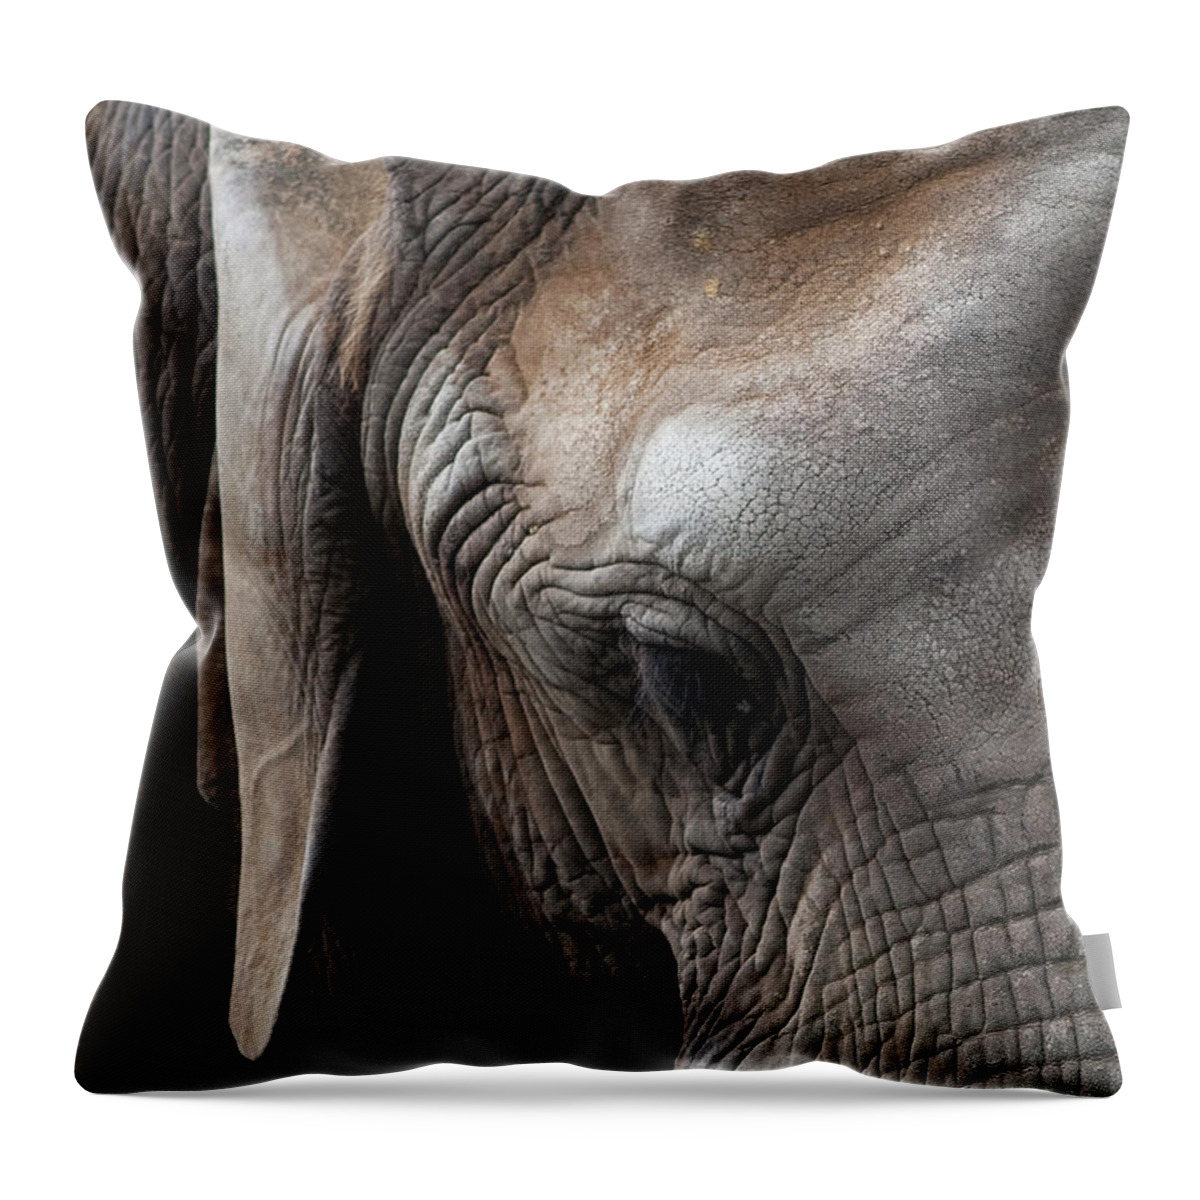 Elephant Throw Pillow featuring the photograph Elephant Eye by Lorraine Devon Wilke